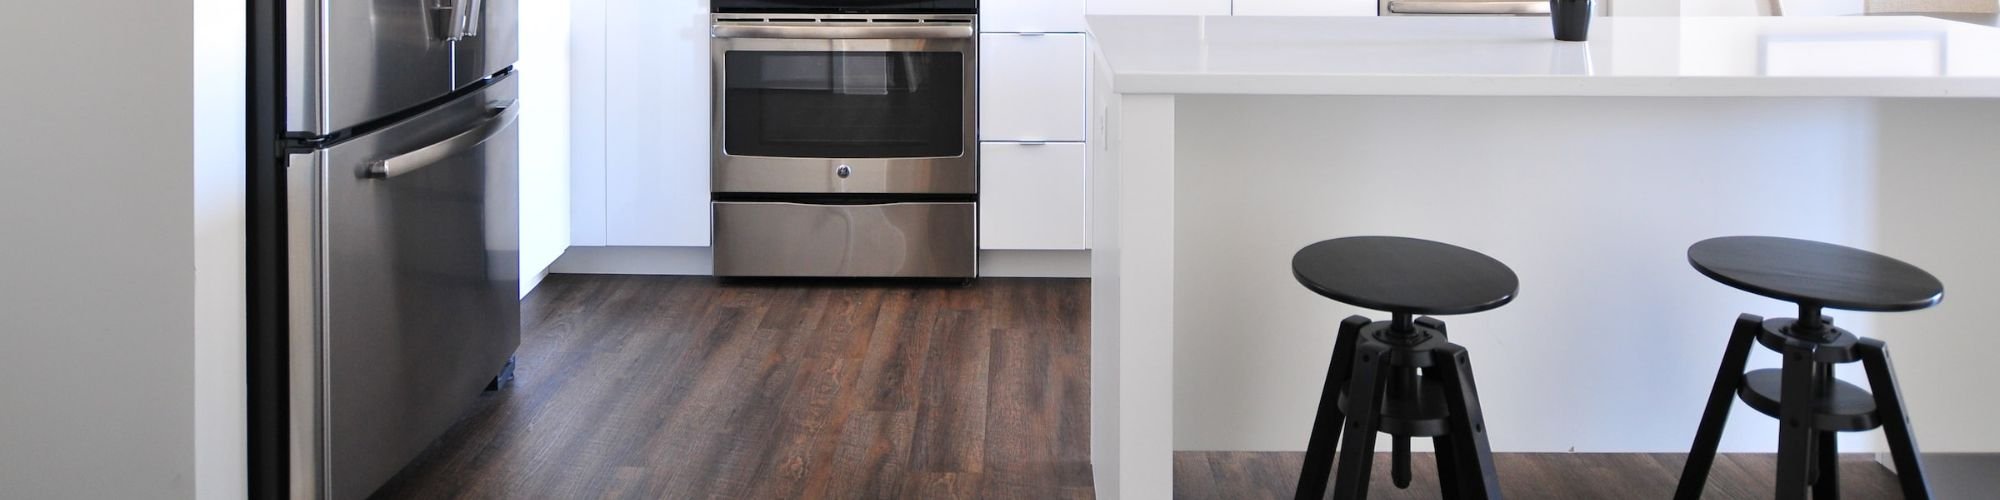 Durable hardwood flooring in a modern white kitchen